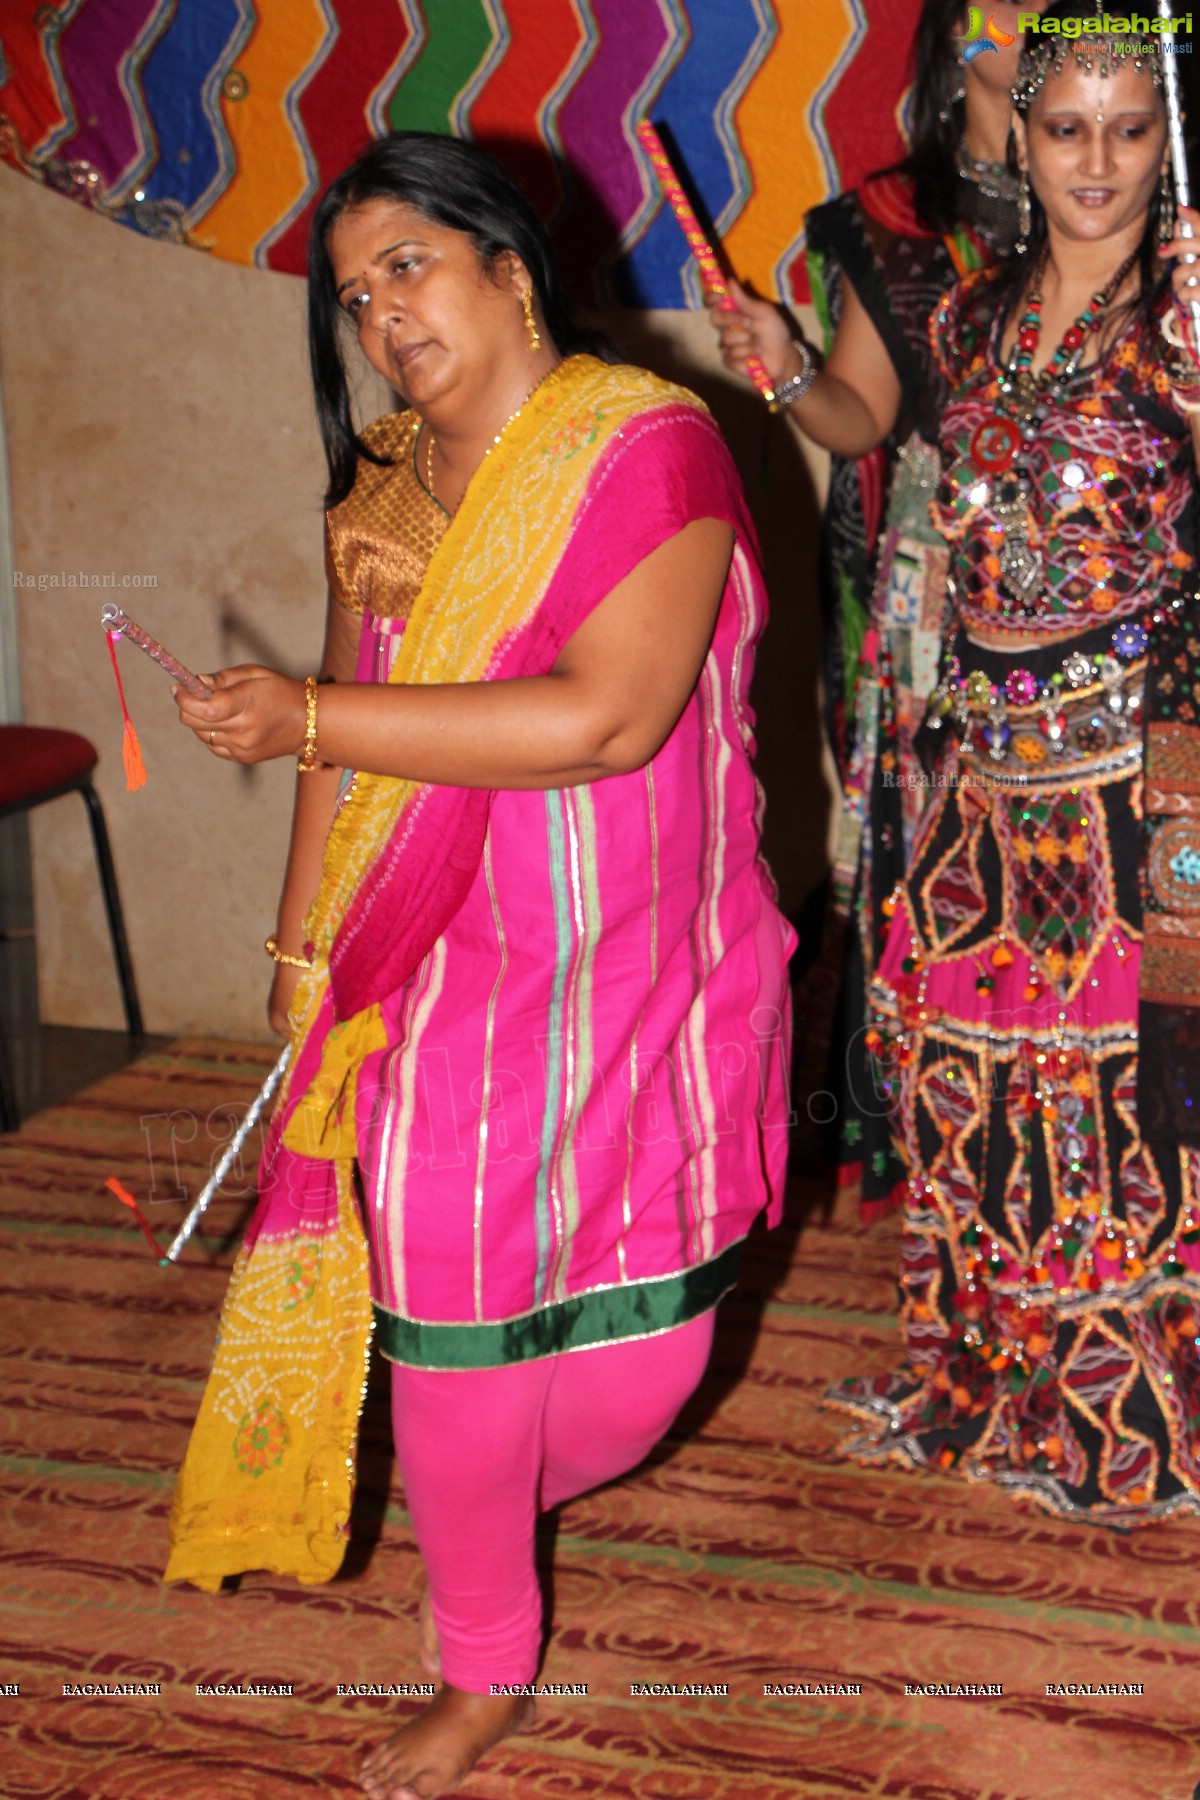 Mom and Kiddos Club's Training of Zumba Garba, Dandiya and Vithala